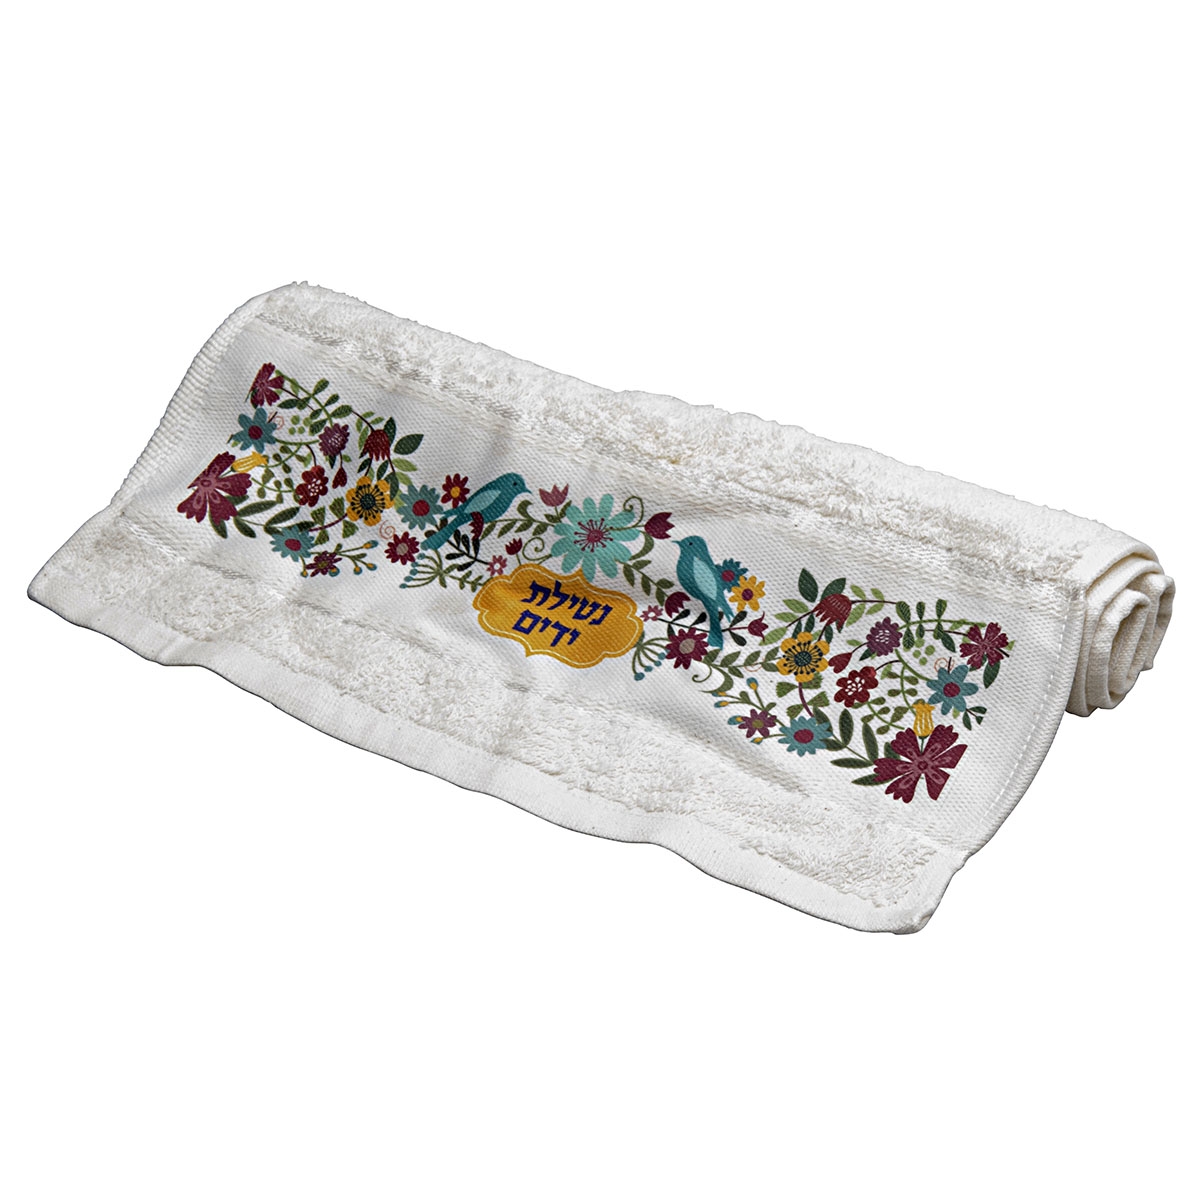 Dorit Judaica Netilat Yadayim Towel with Birds and Flowers - 1